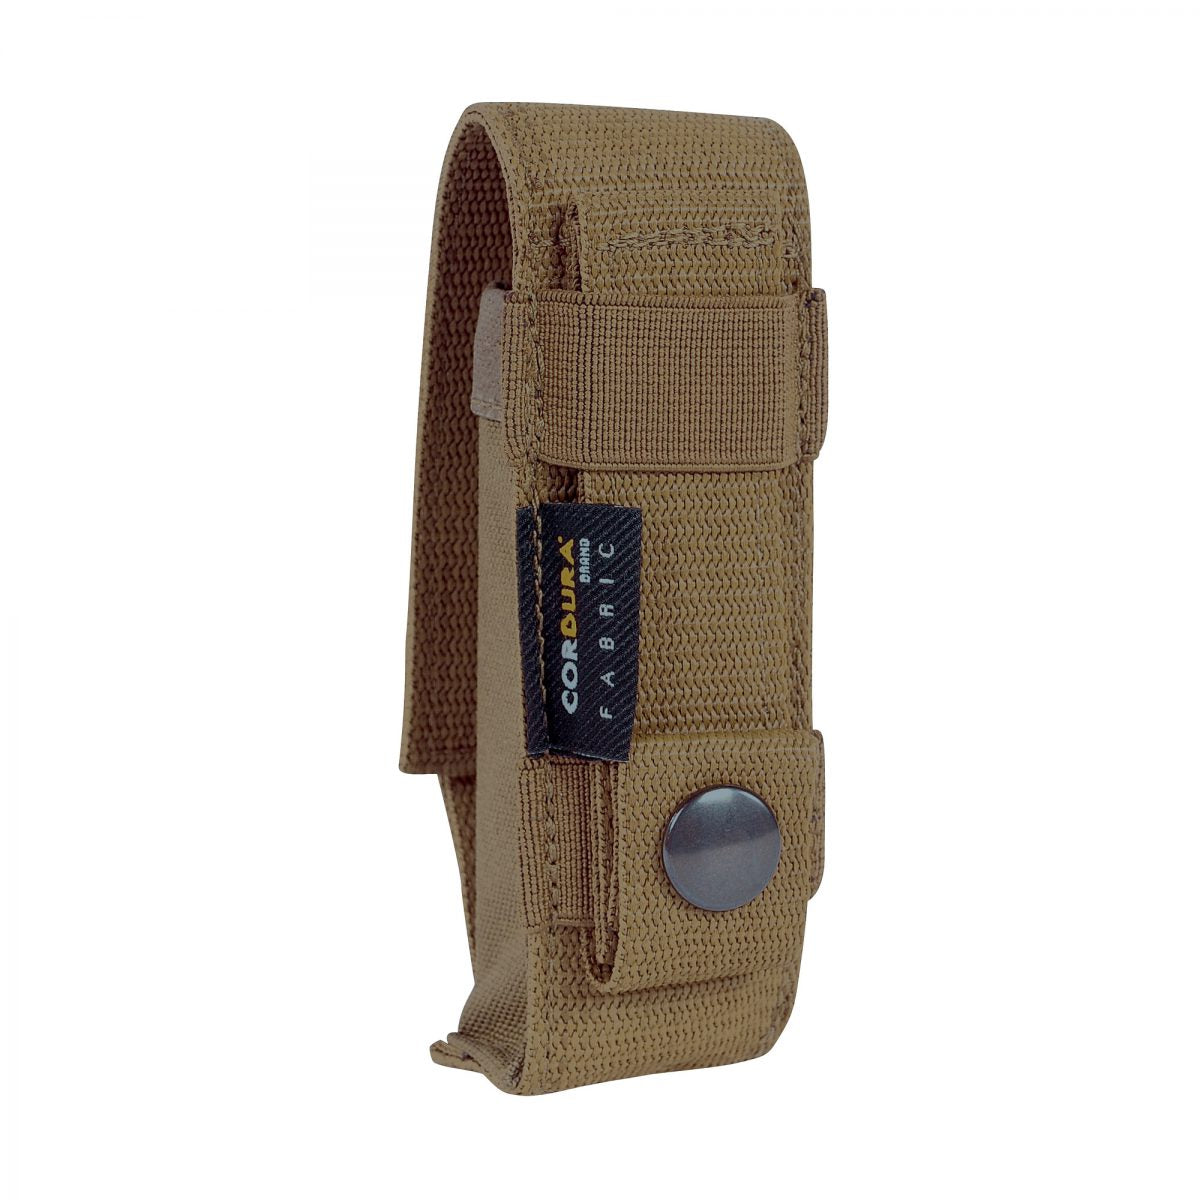 Tasmanian Tiger Tool Pocket Accessories Tasmanian Tiger Tactical Gear Supplier Tactical Distributors Australia